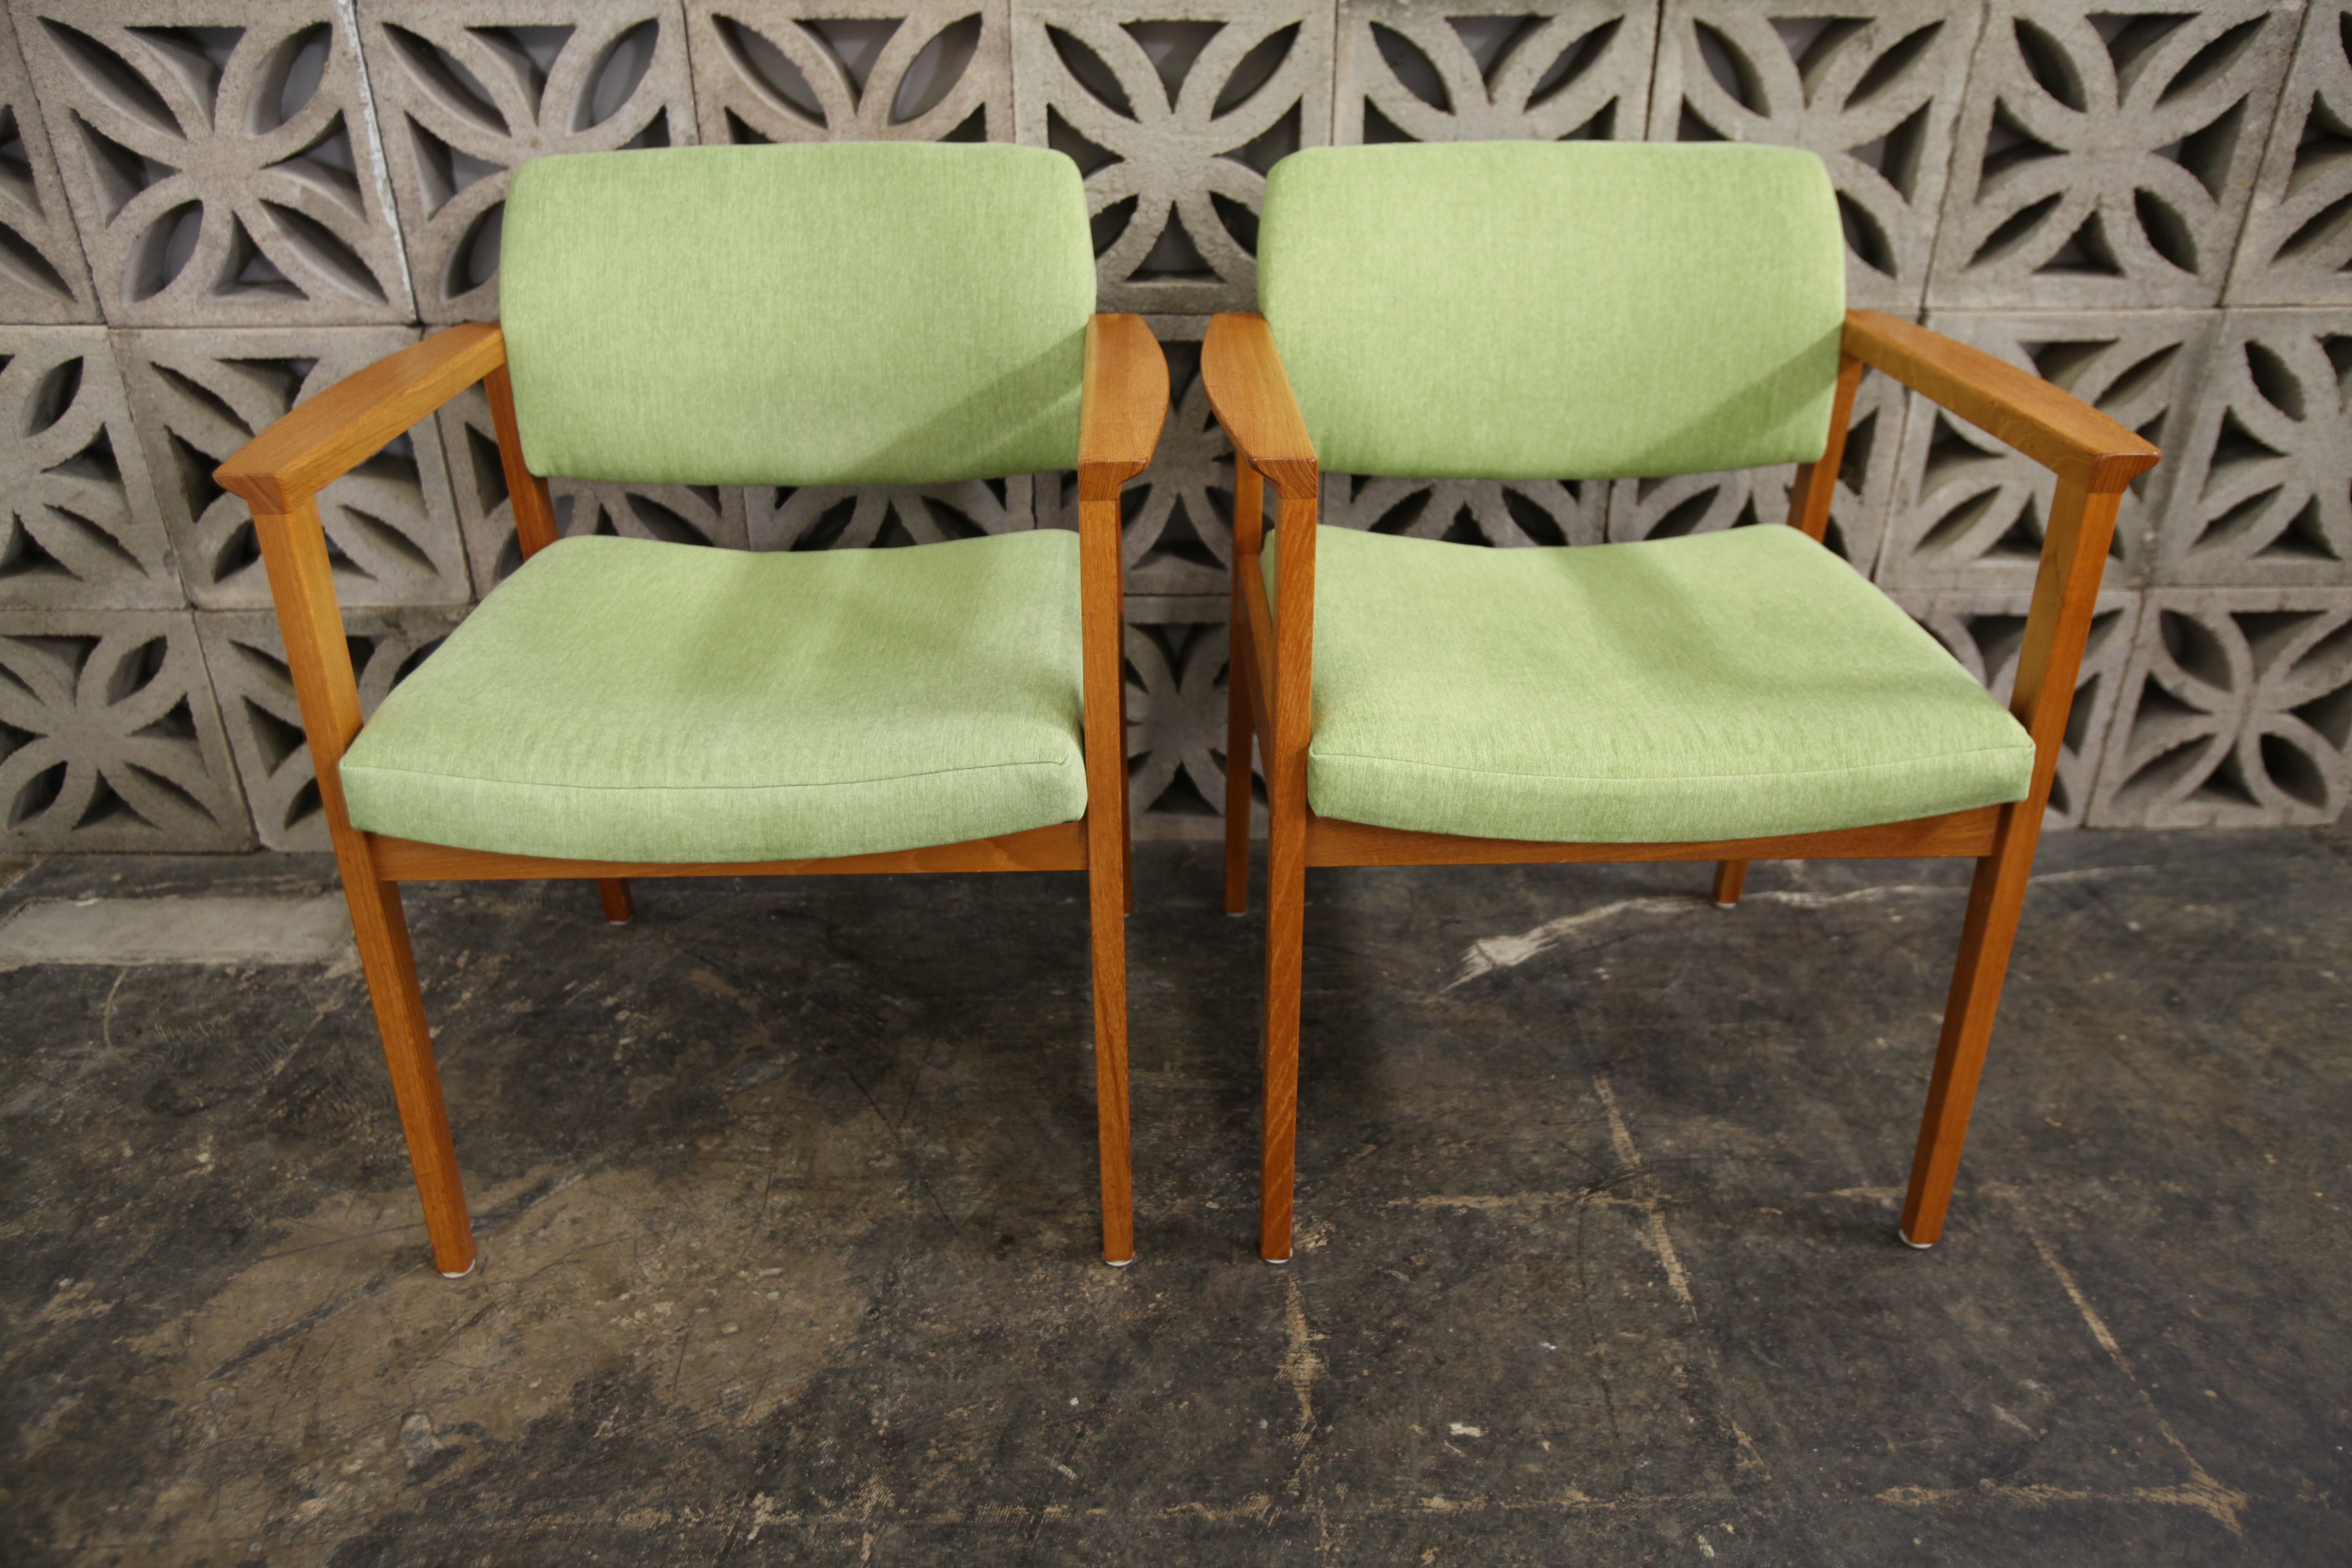 Vintage Teak Arm Chair w/ New Fabric (24.75"W x 24"D x 30.5"H)